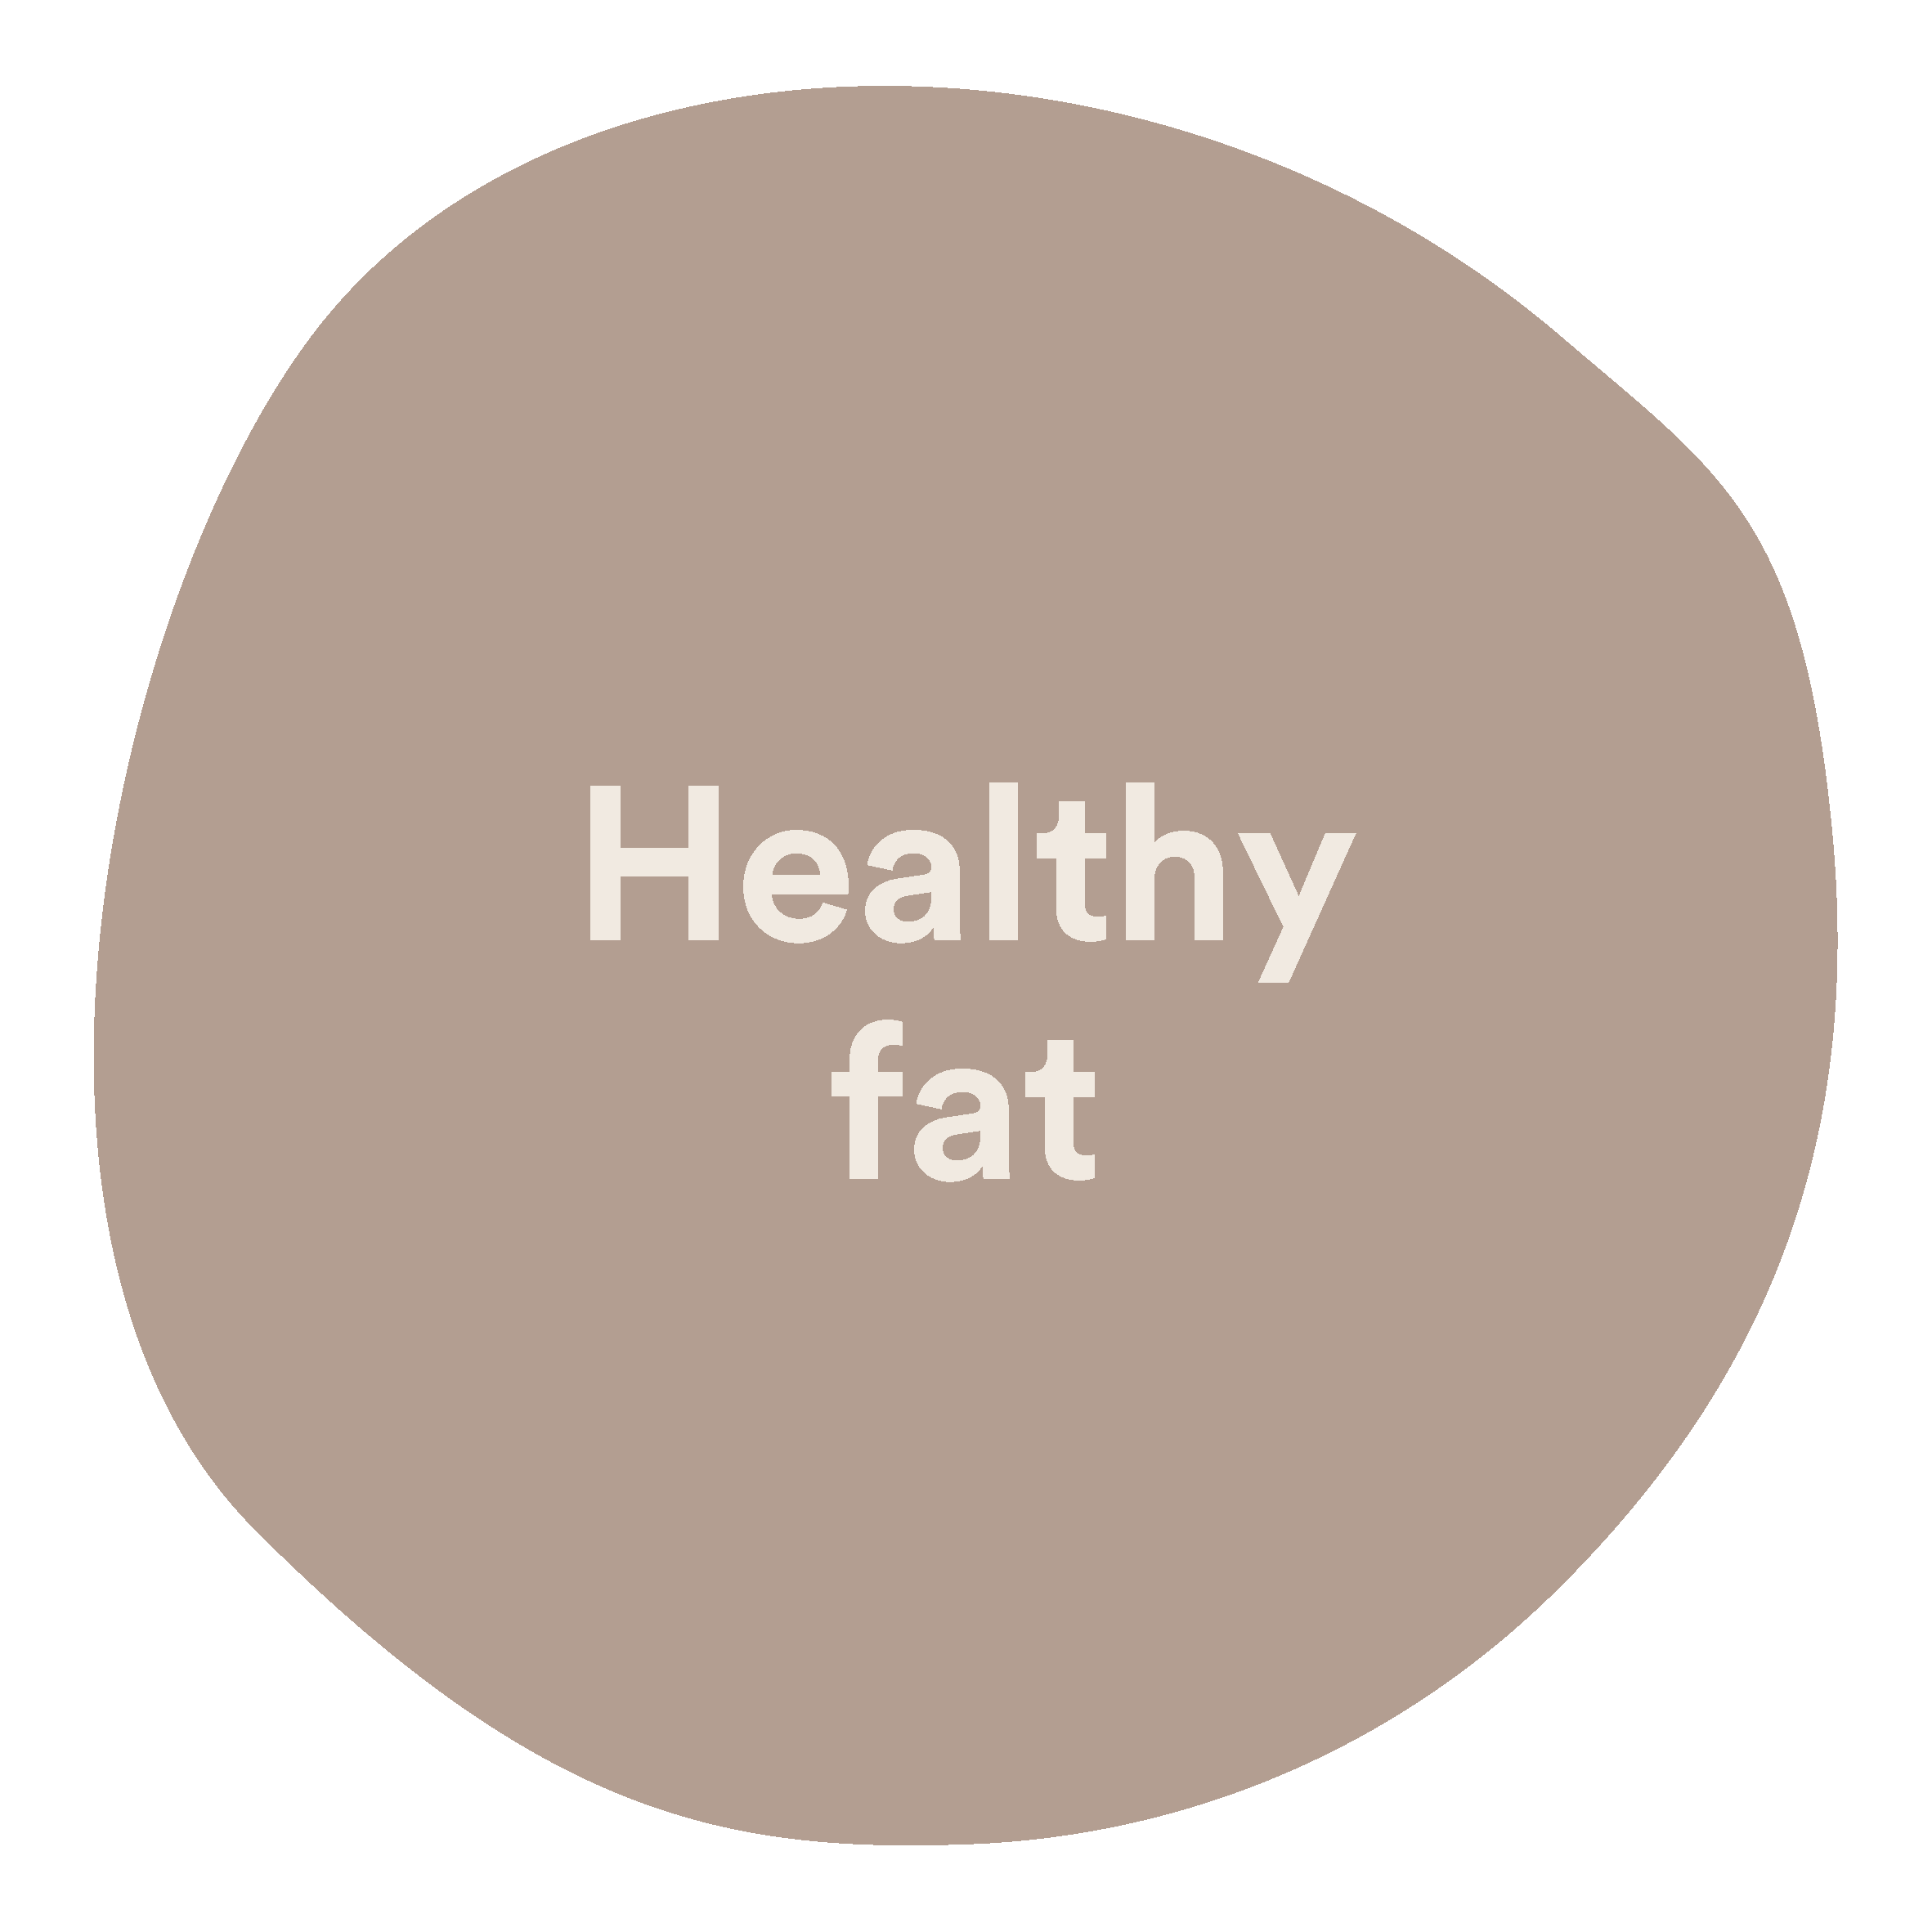 Healthy Fat| WMO